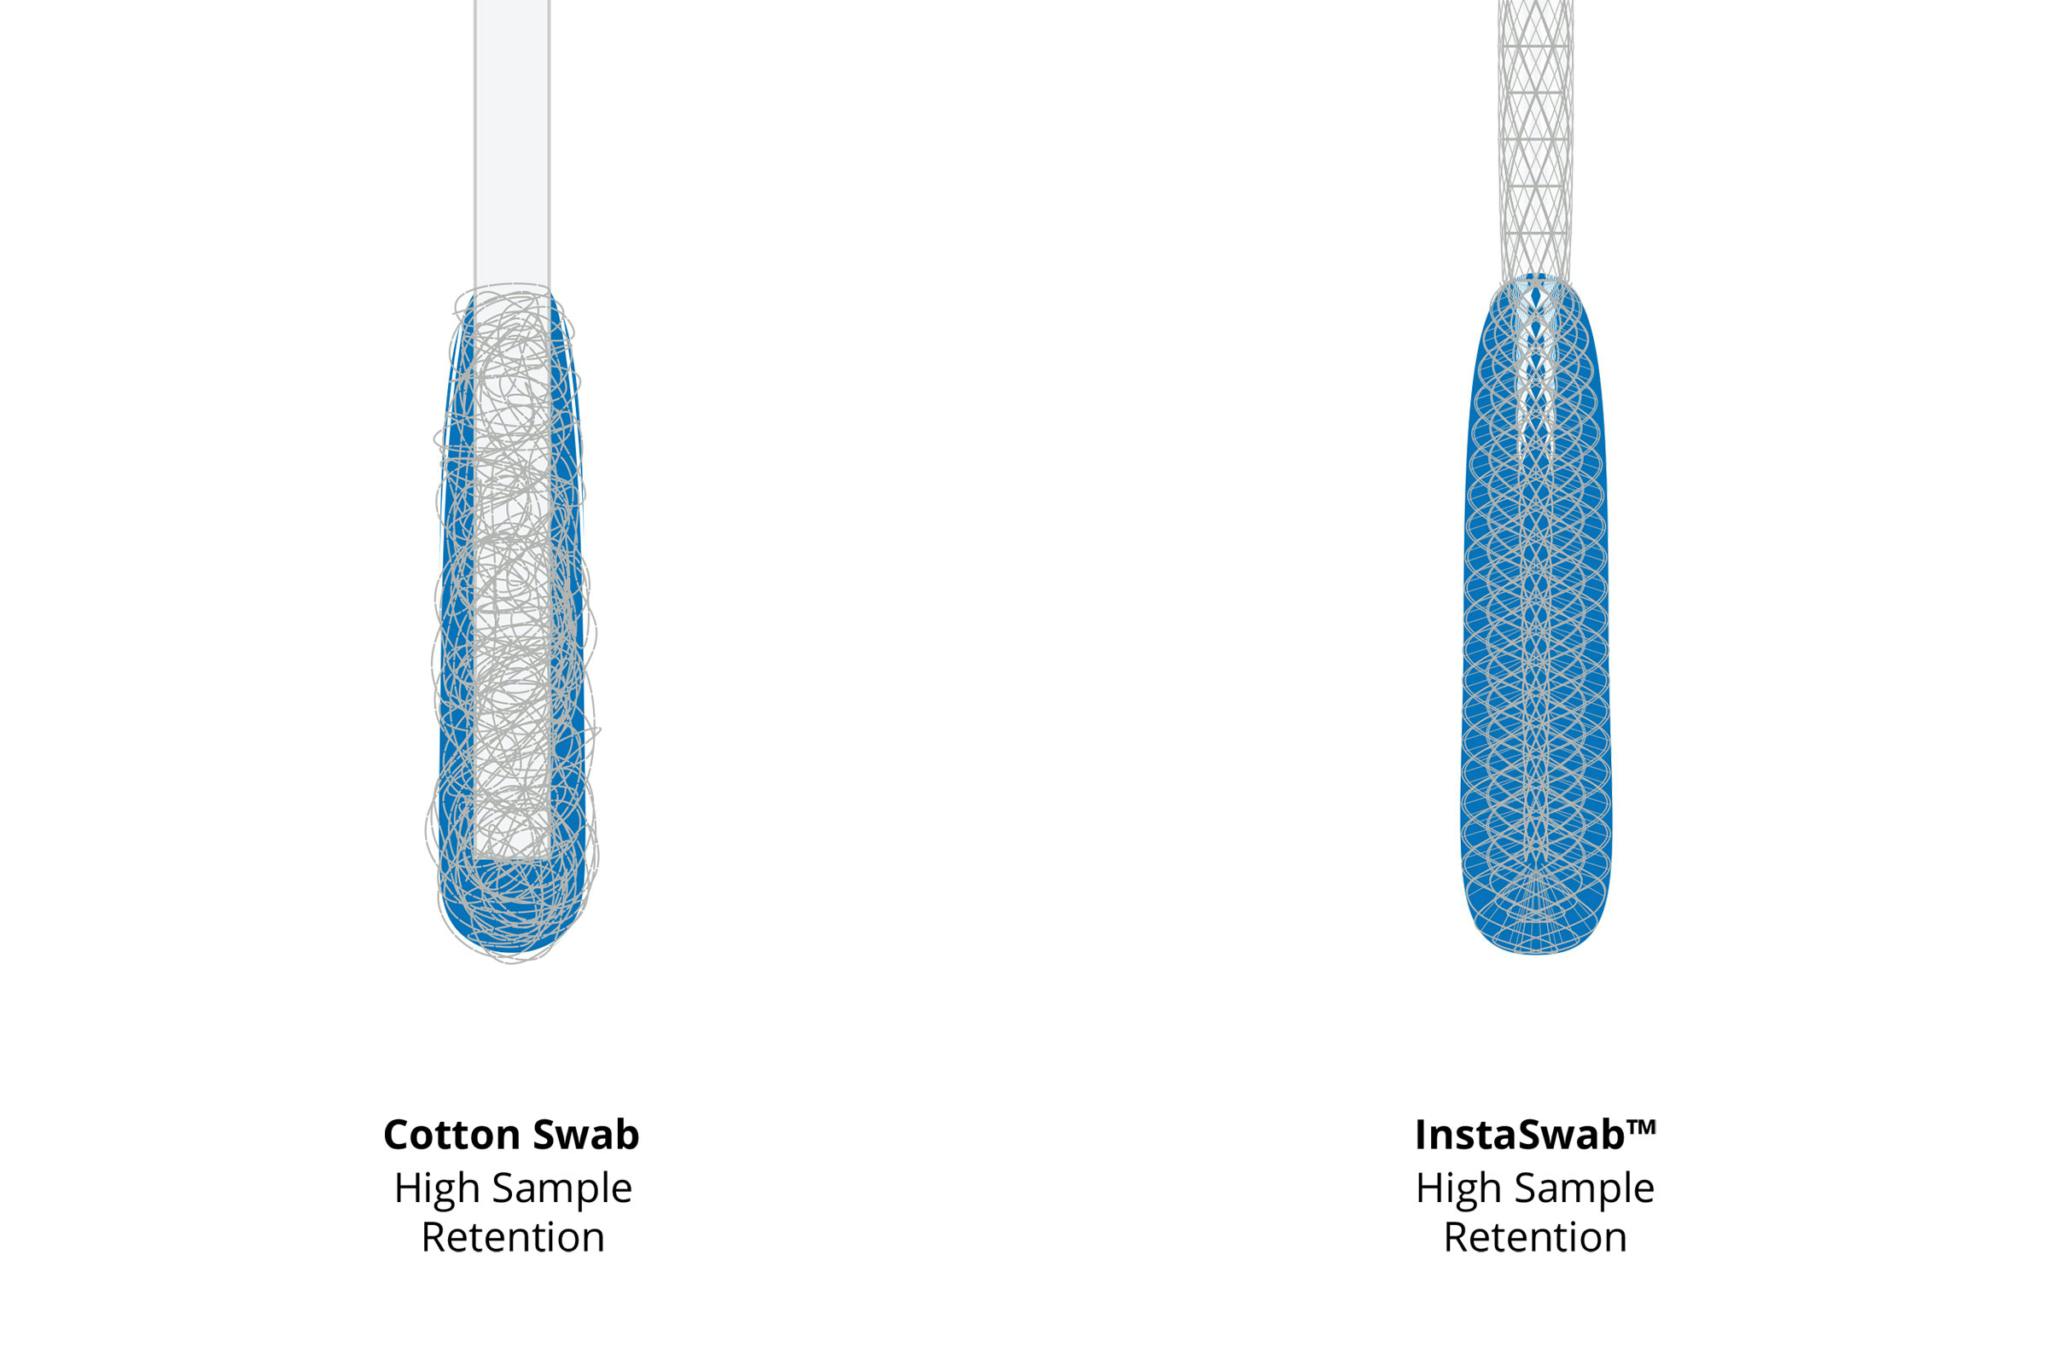 Cotton swab vs Instaswab retention